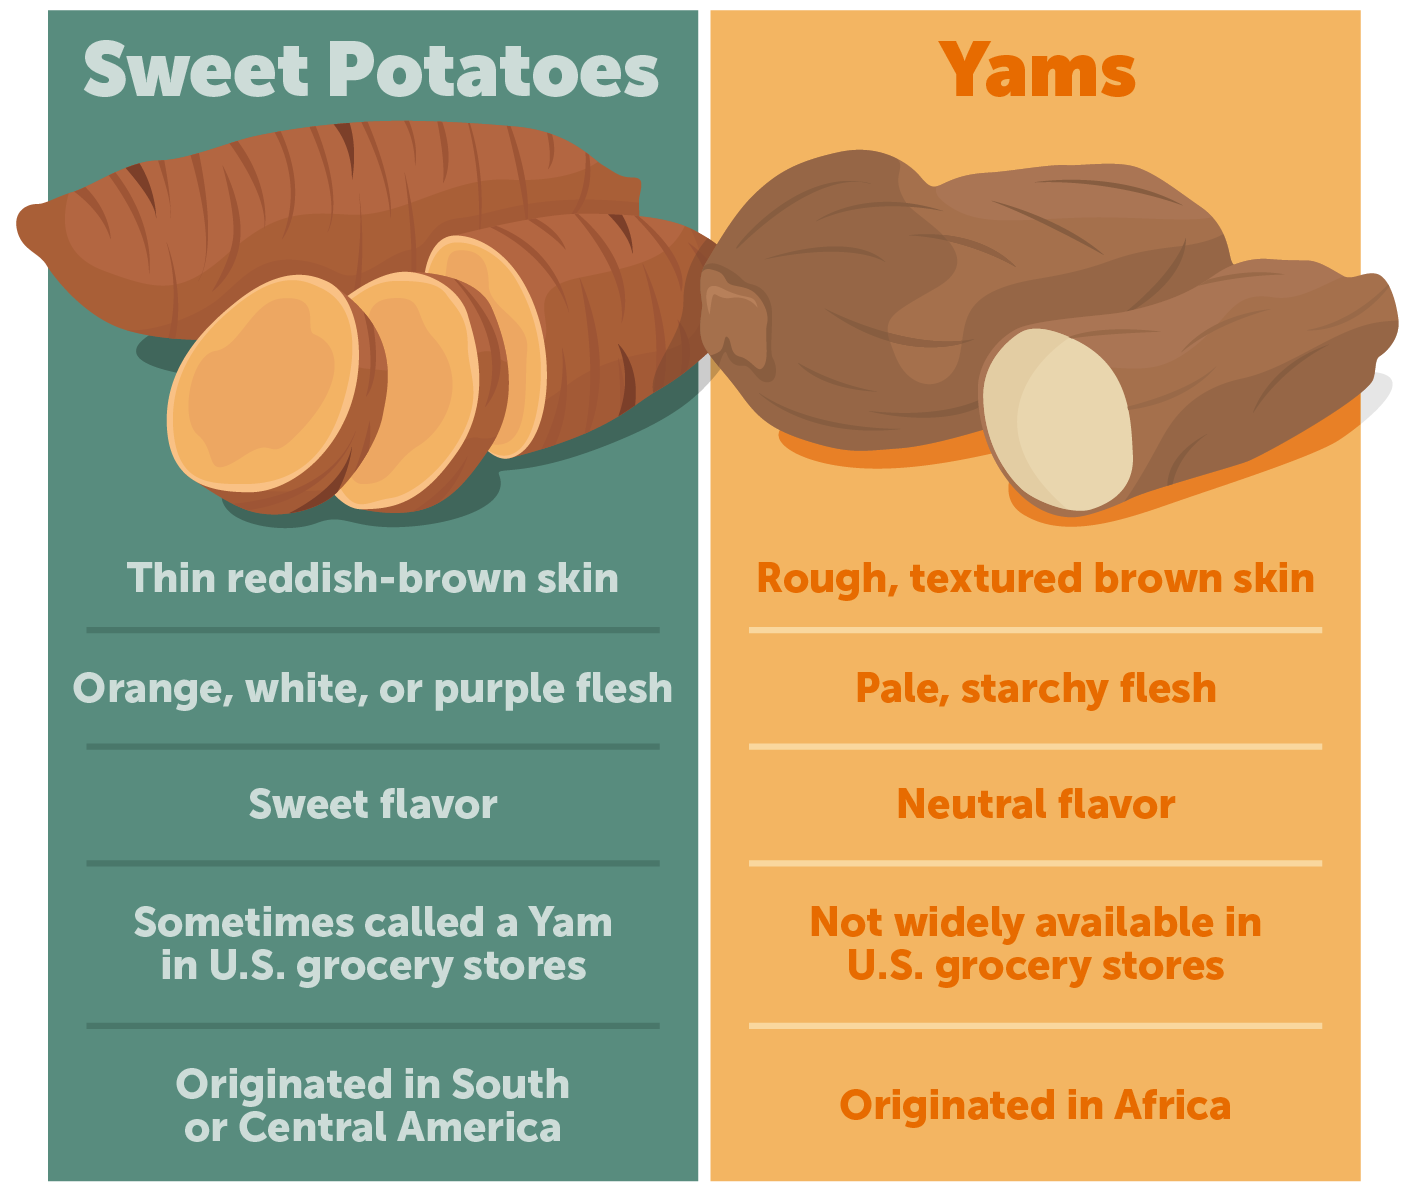 sweet-potatoes-yams_infographic.png